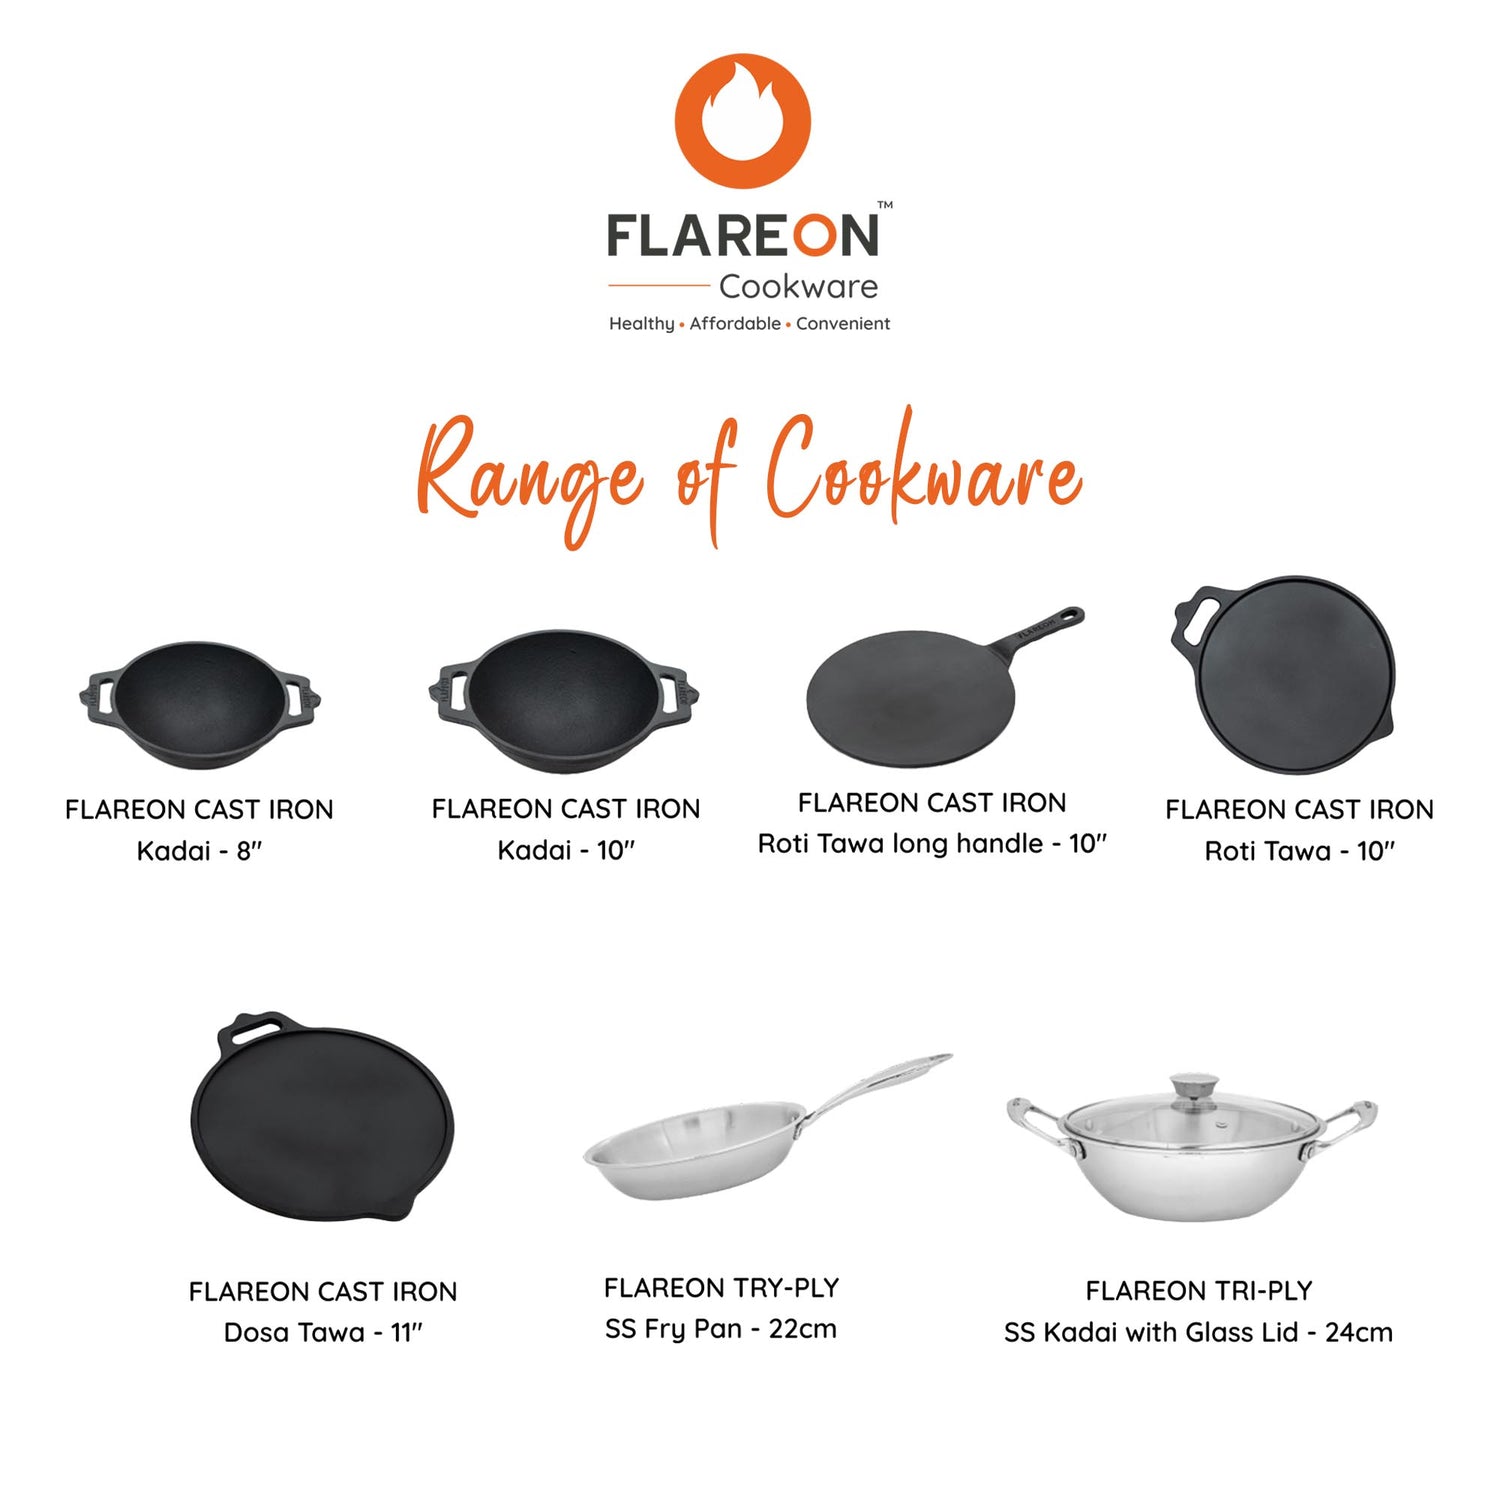 FlareOn's Cast Iron Dosa Tawa 11-Inch Range of Cookware